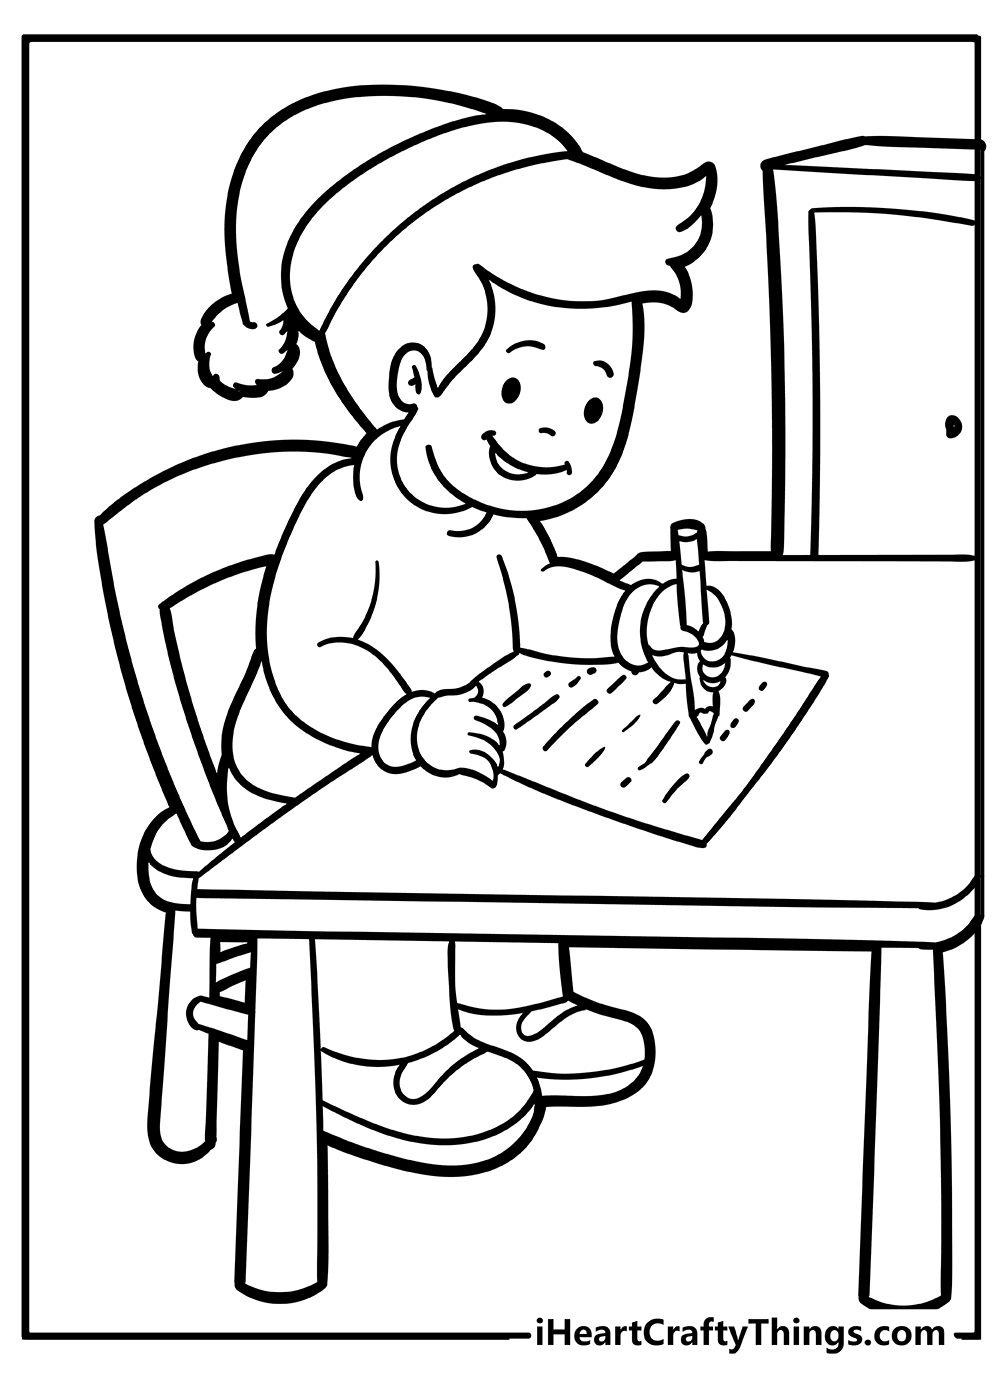 Kindergarten Coloring Original Sheet for children free download